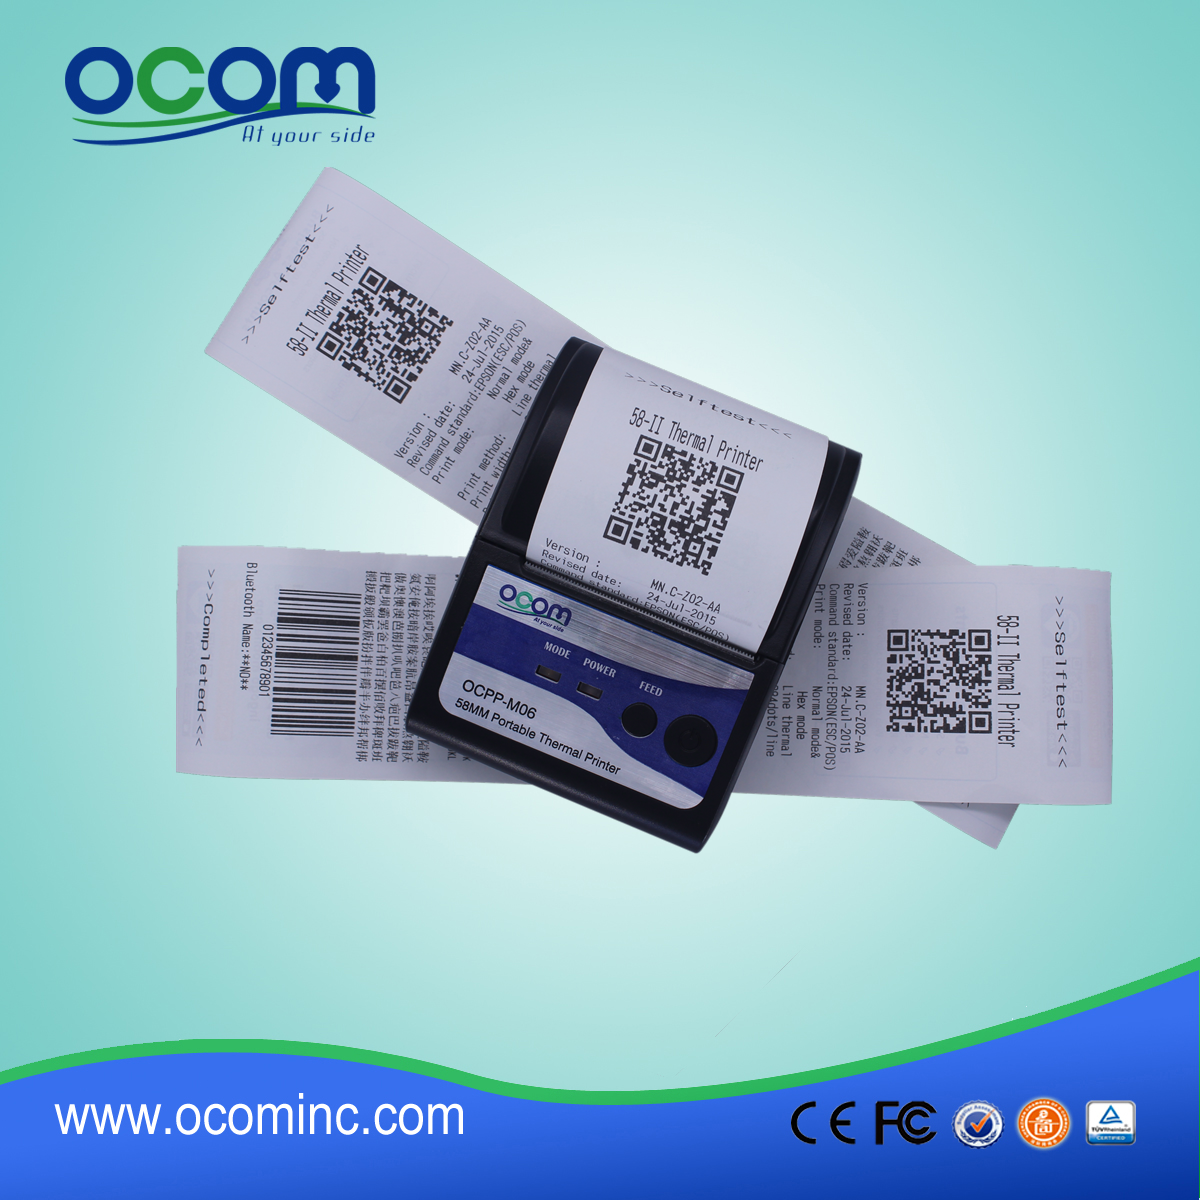 (OCPP-M06) OCOM caliente venta bajo costo a android impresora impresora pos